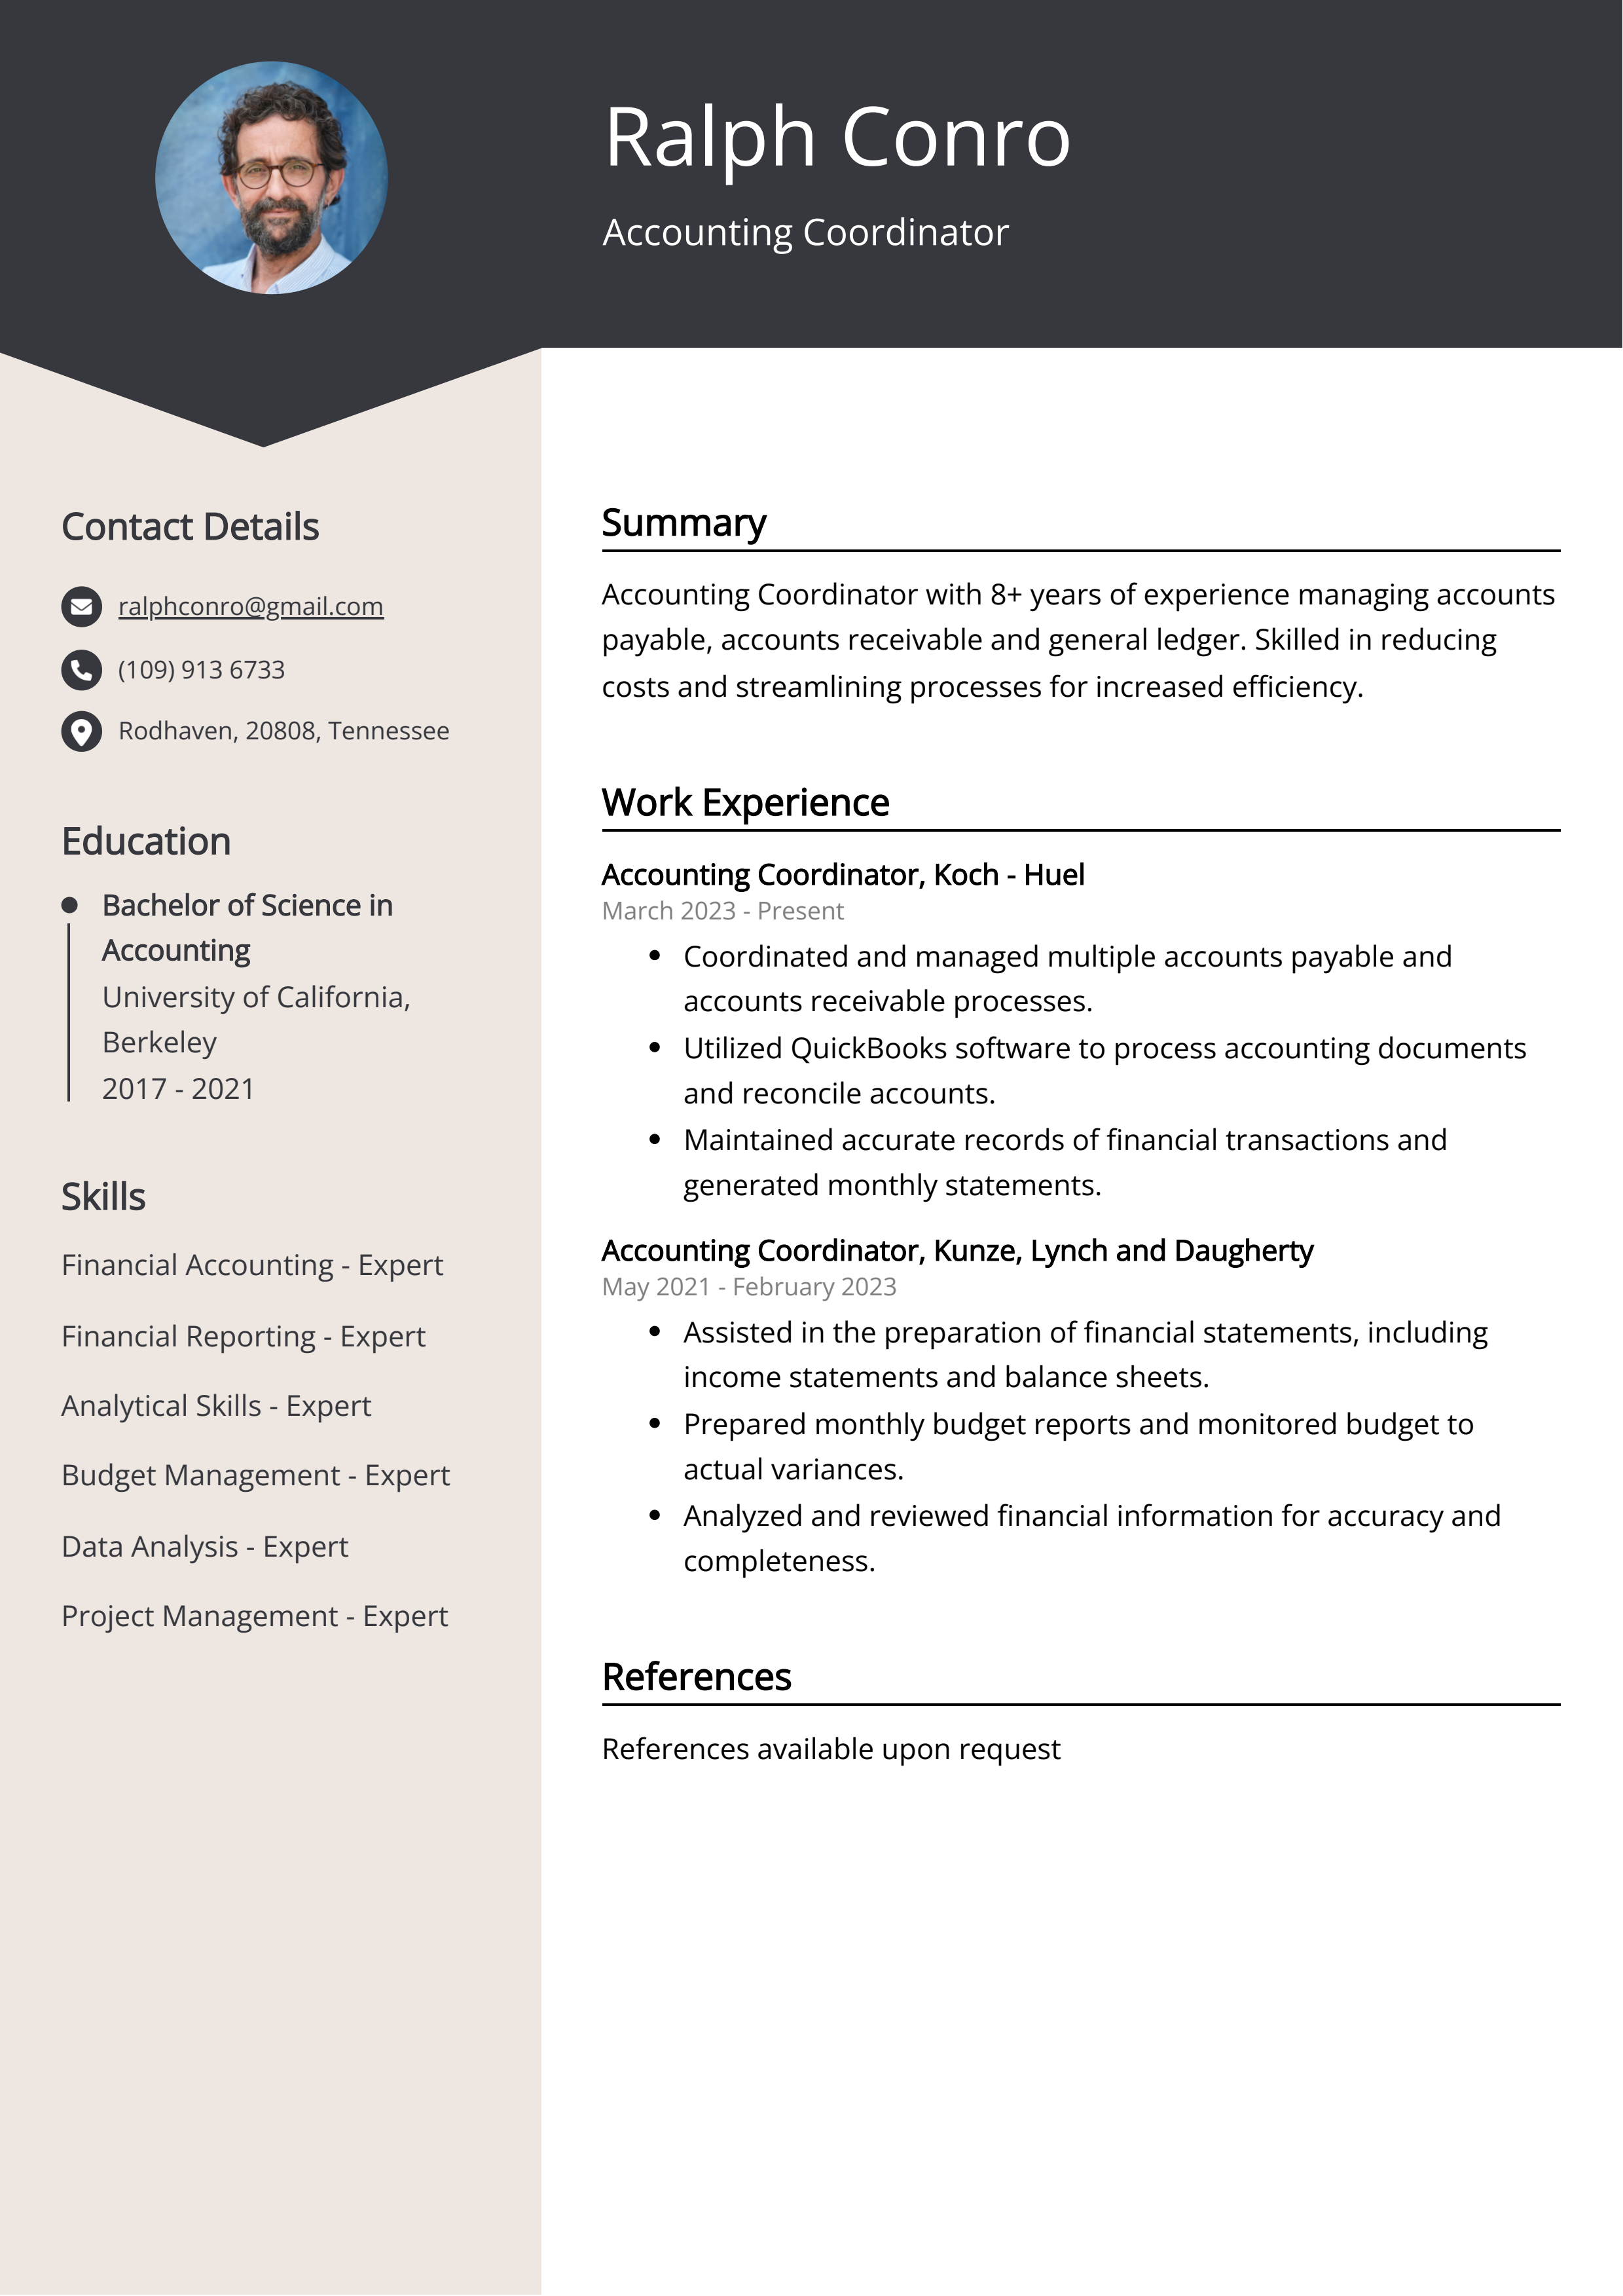 Accounting Coordinator CV Example